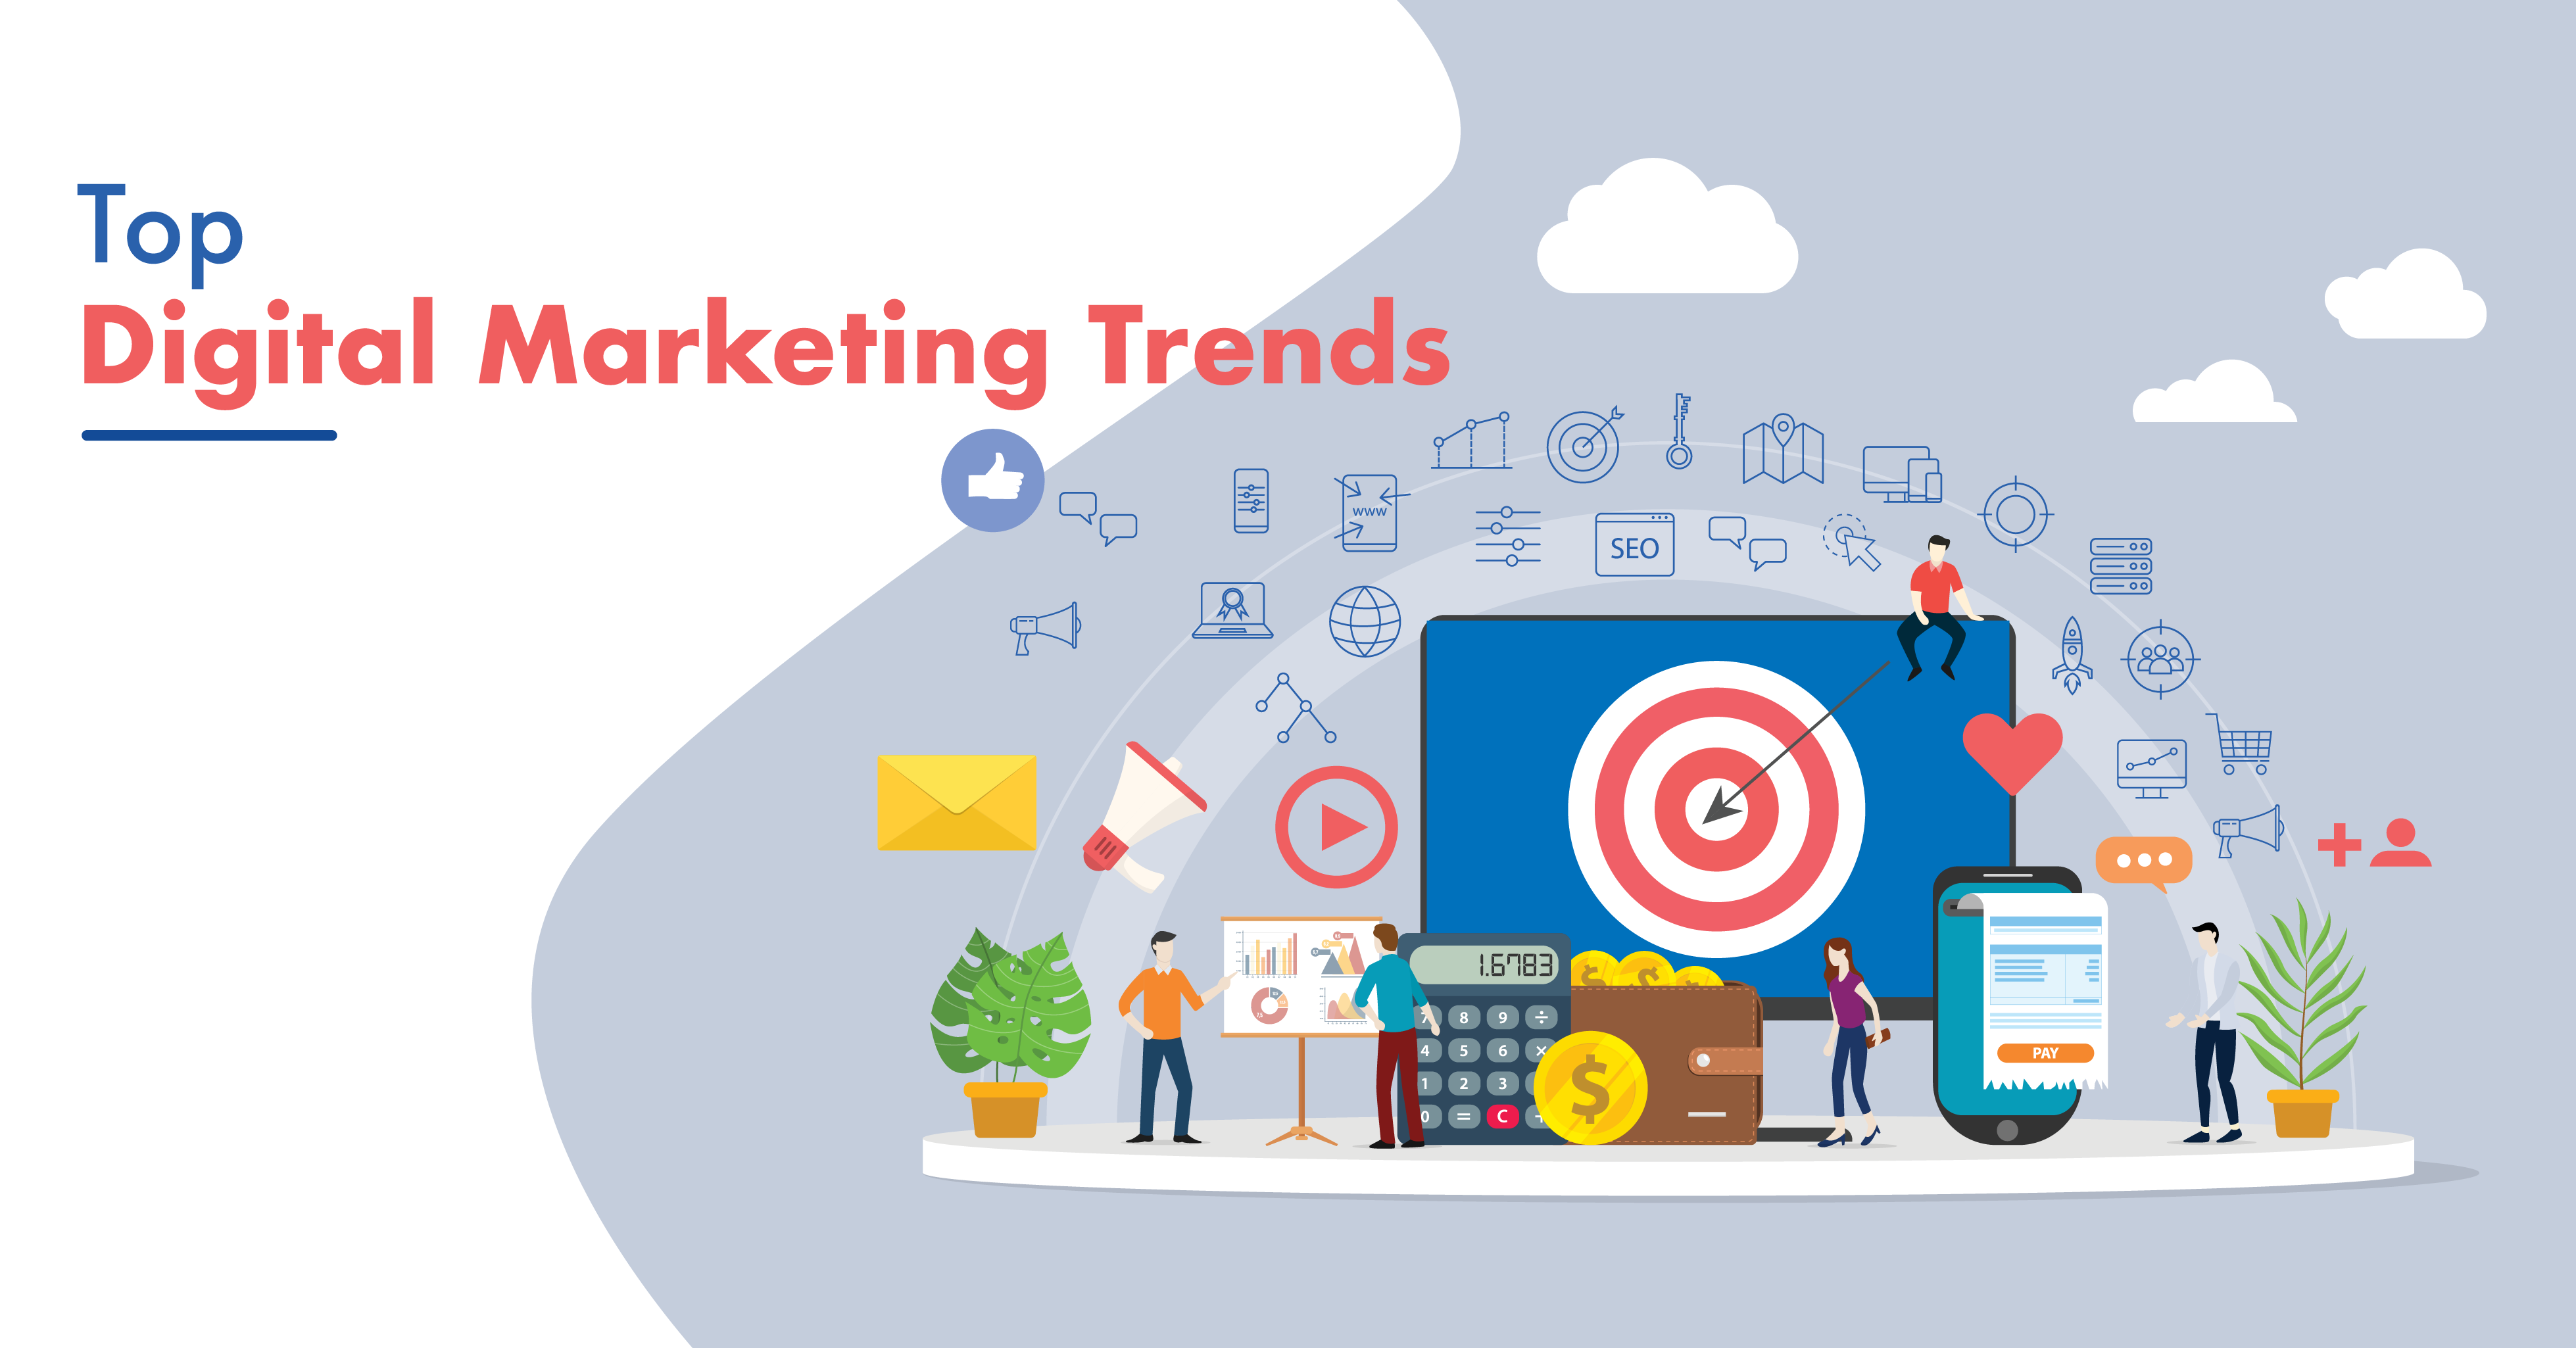 7 Key Digital Marketing Trends for 2021 Technologies